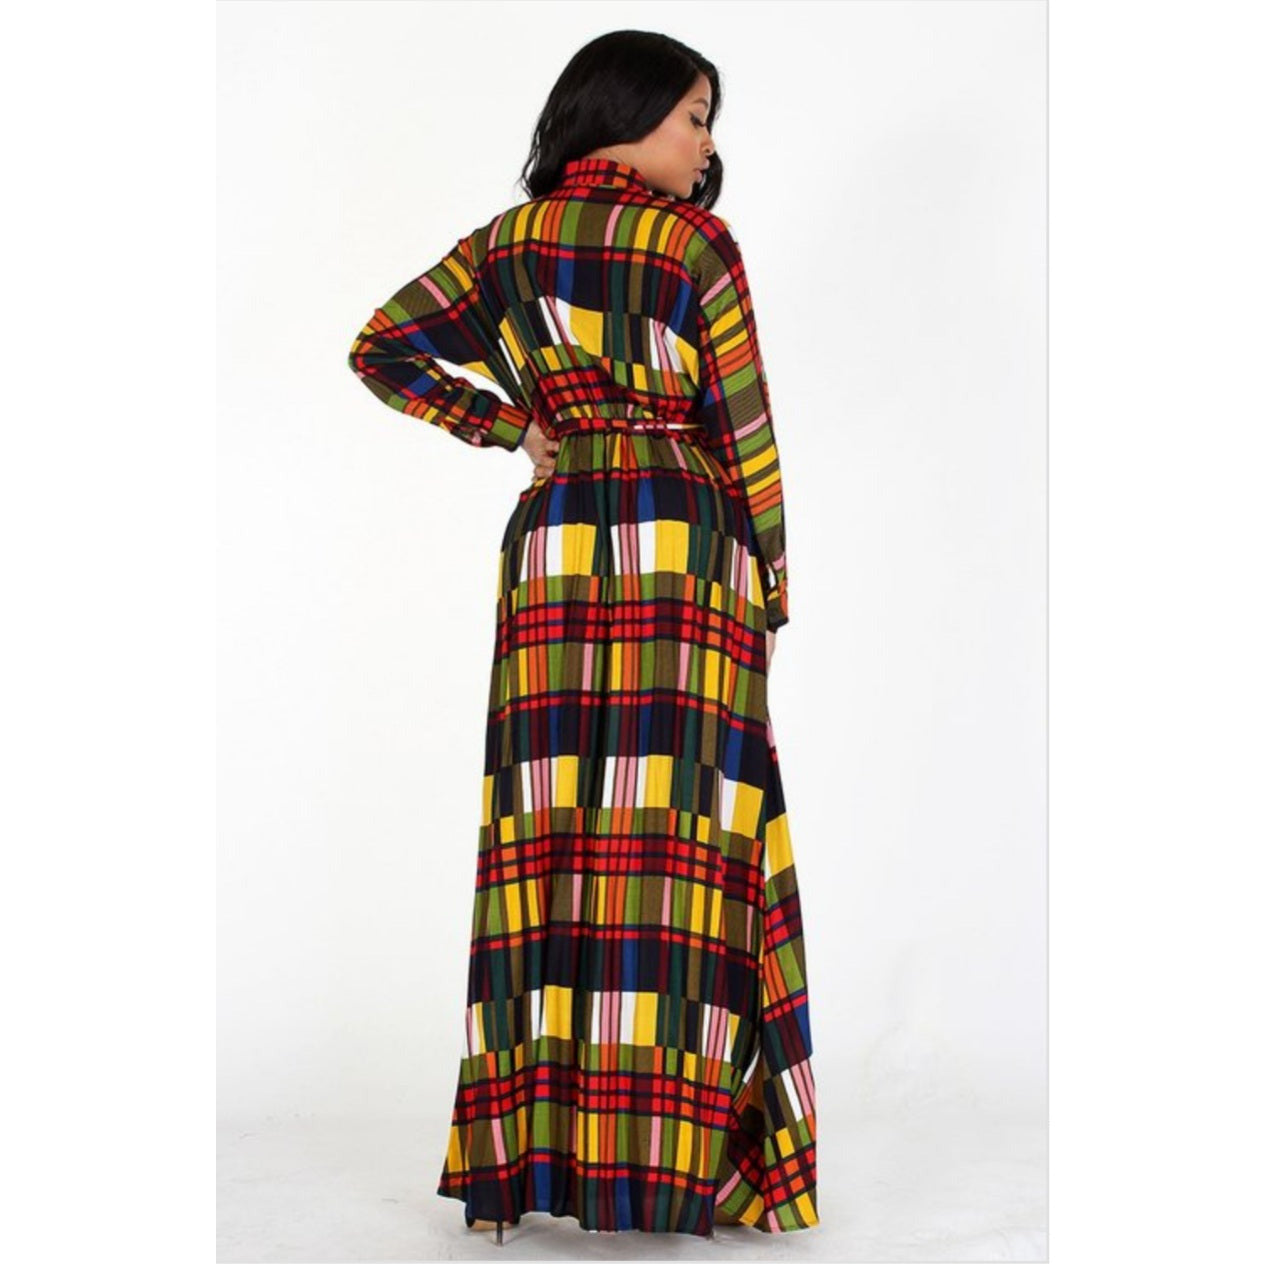 Madison Color Block Plaid Maxi Dress (Mustard) - Ariya's Apparel and Accessories